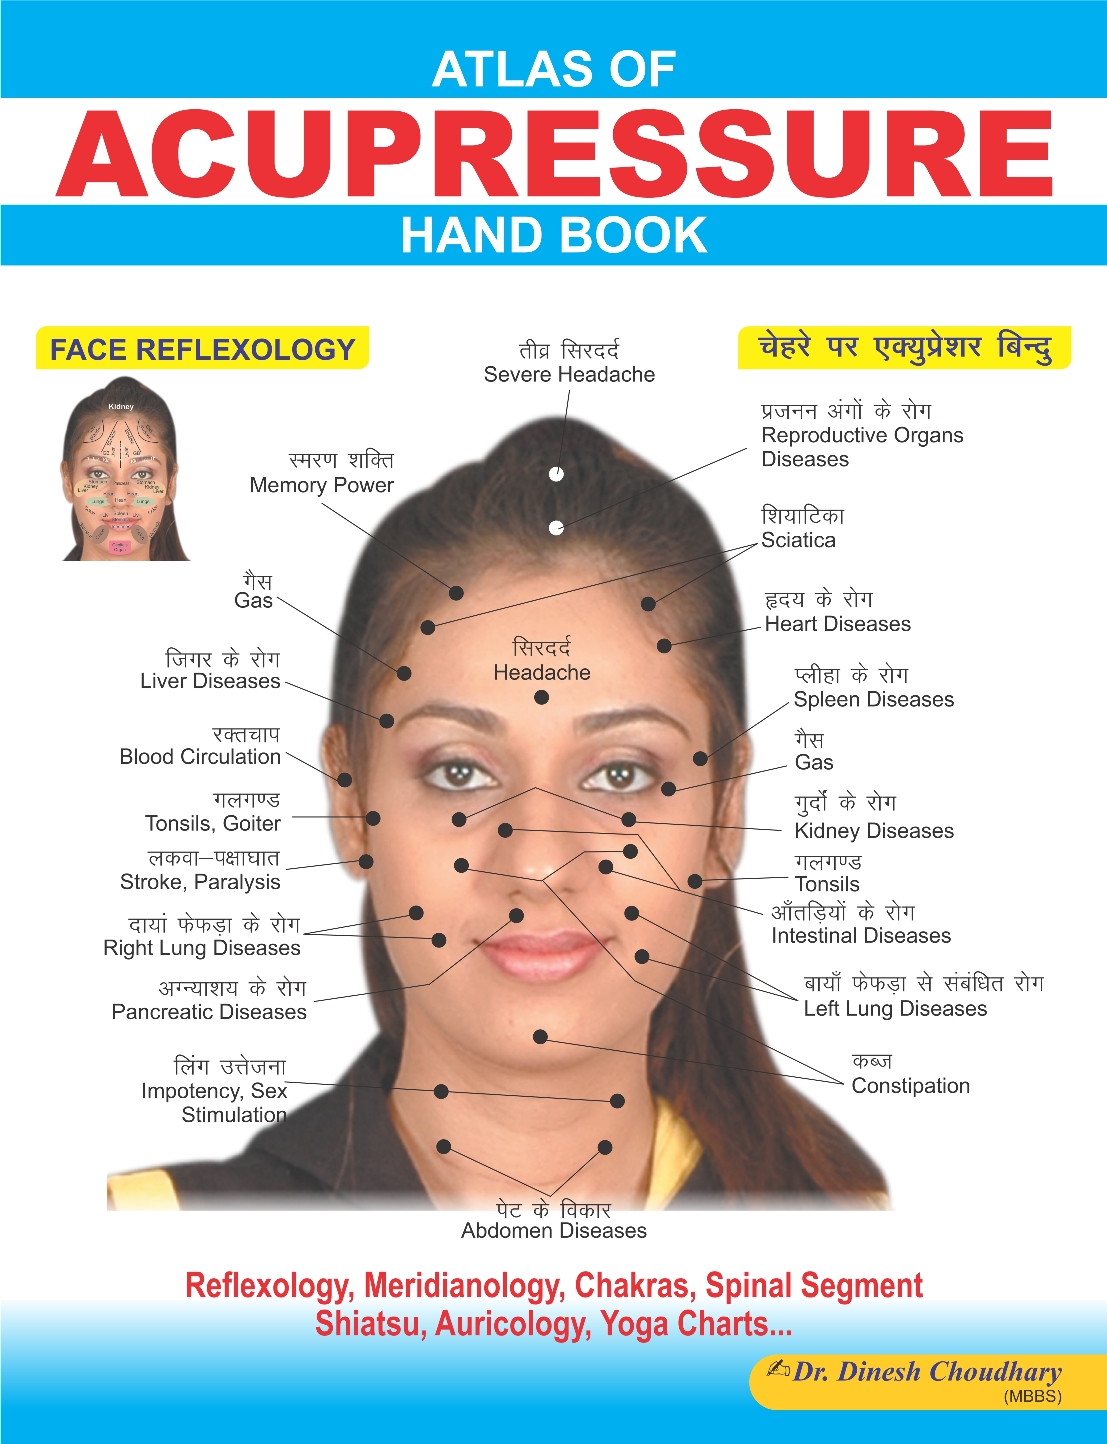 ACS Atlas of Acupressure - Hand Book  - 310 